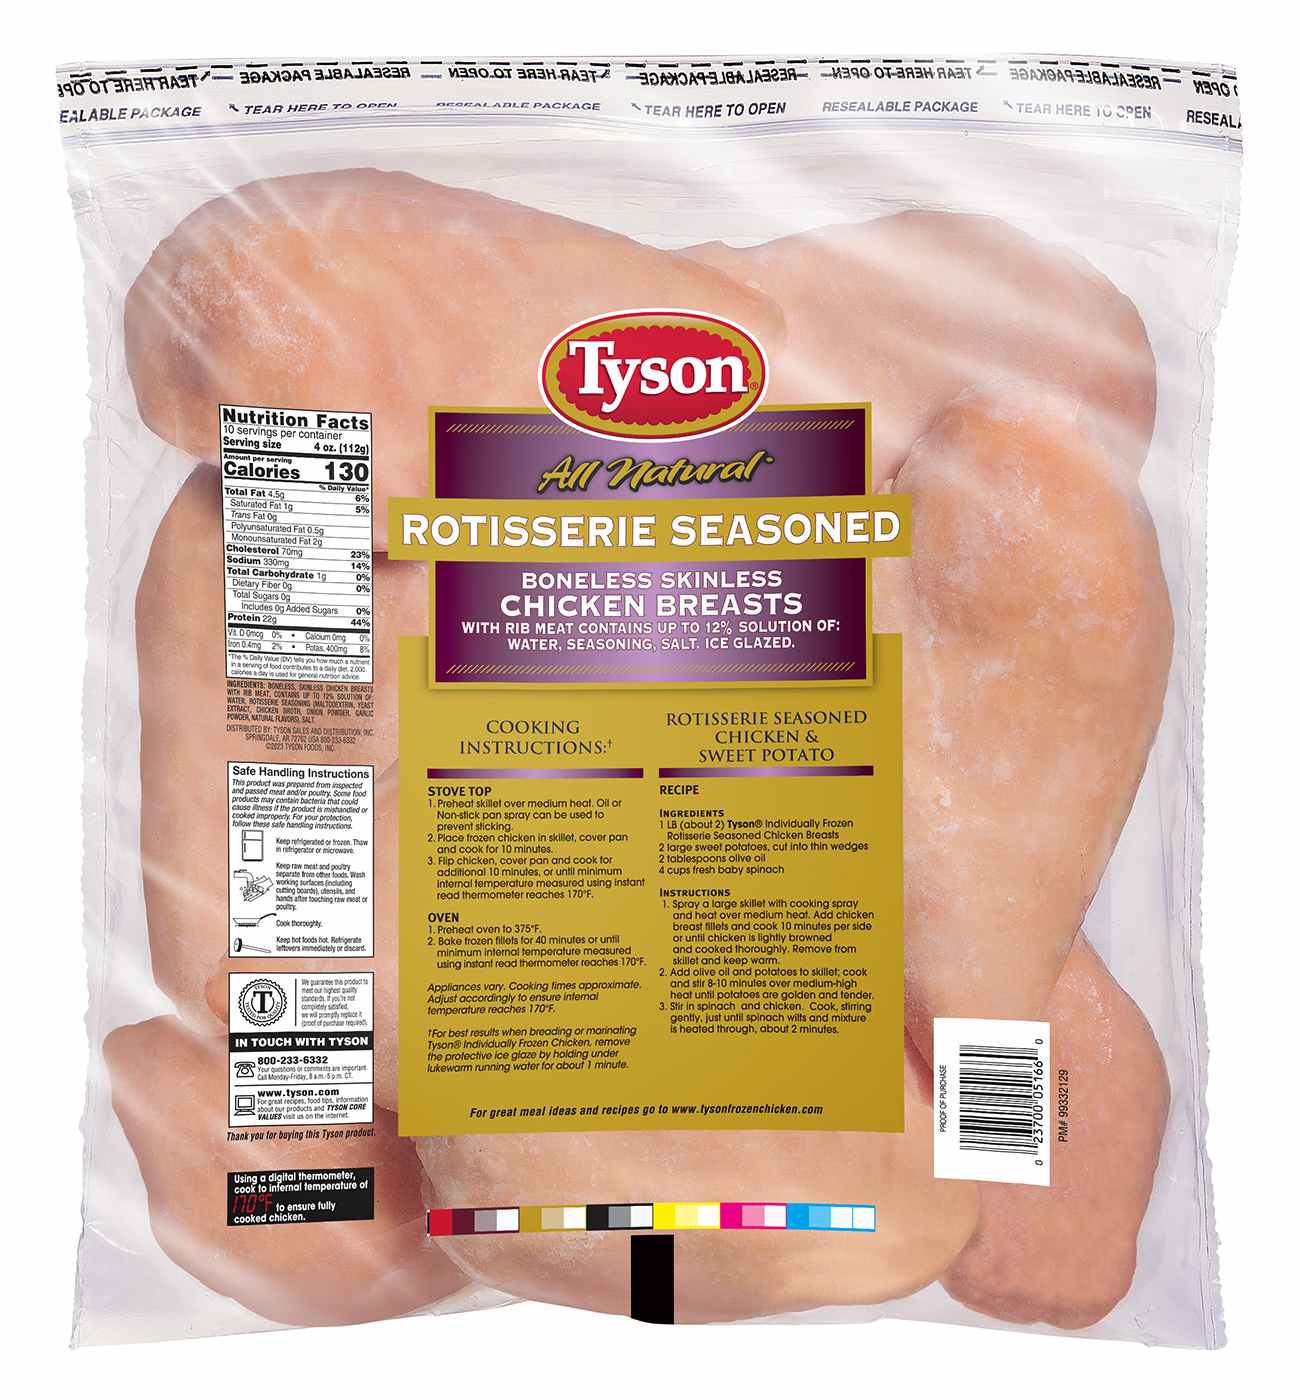 Tyson Frozen Rotisserie Seasoned Boneless Skinless Chicken Breasts; image 2 of 2